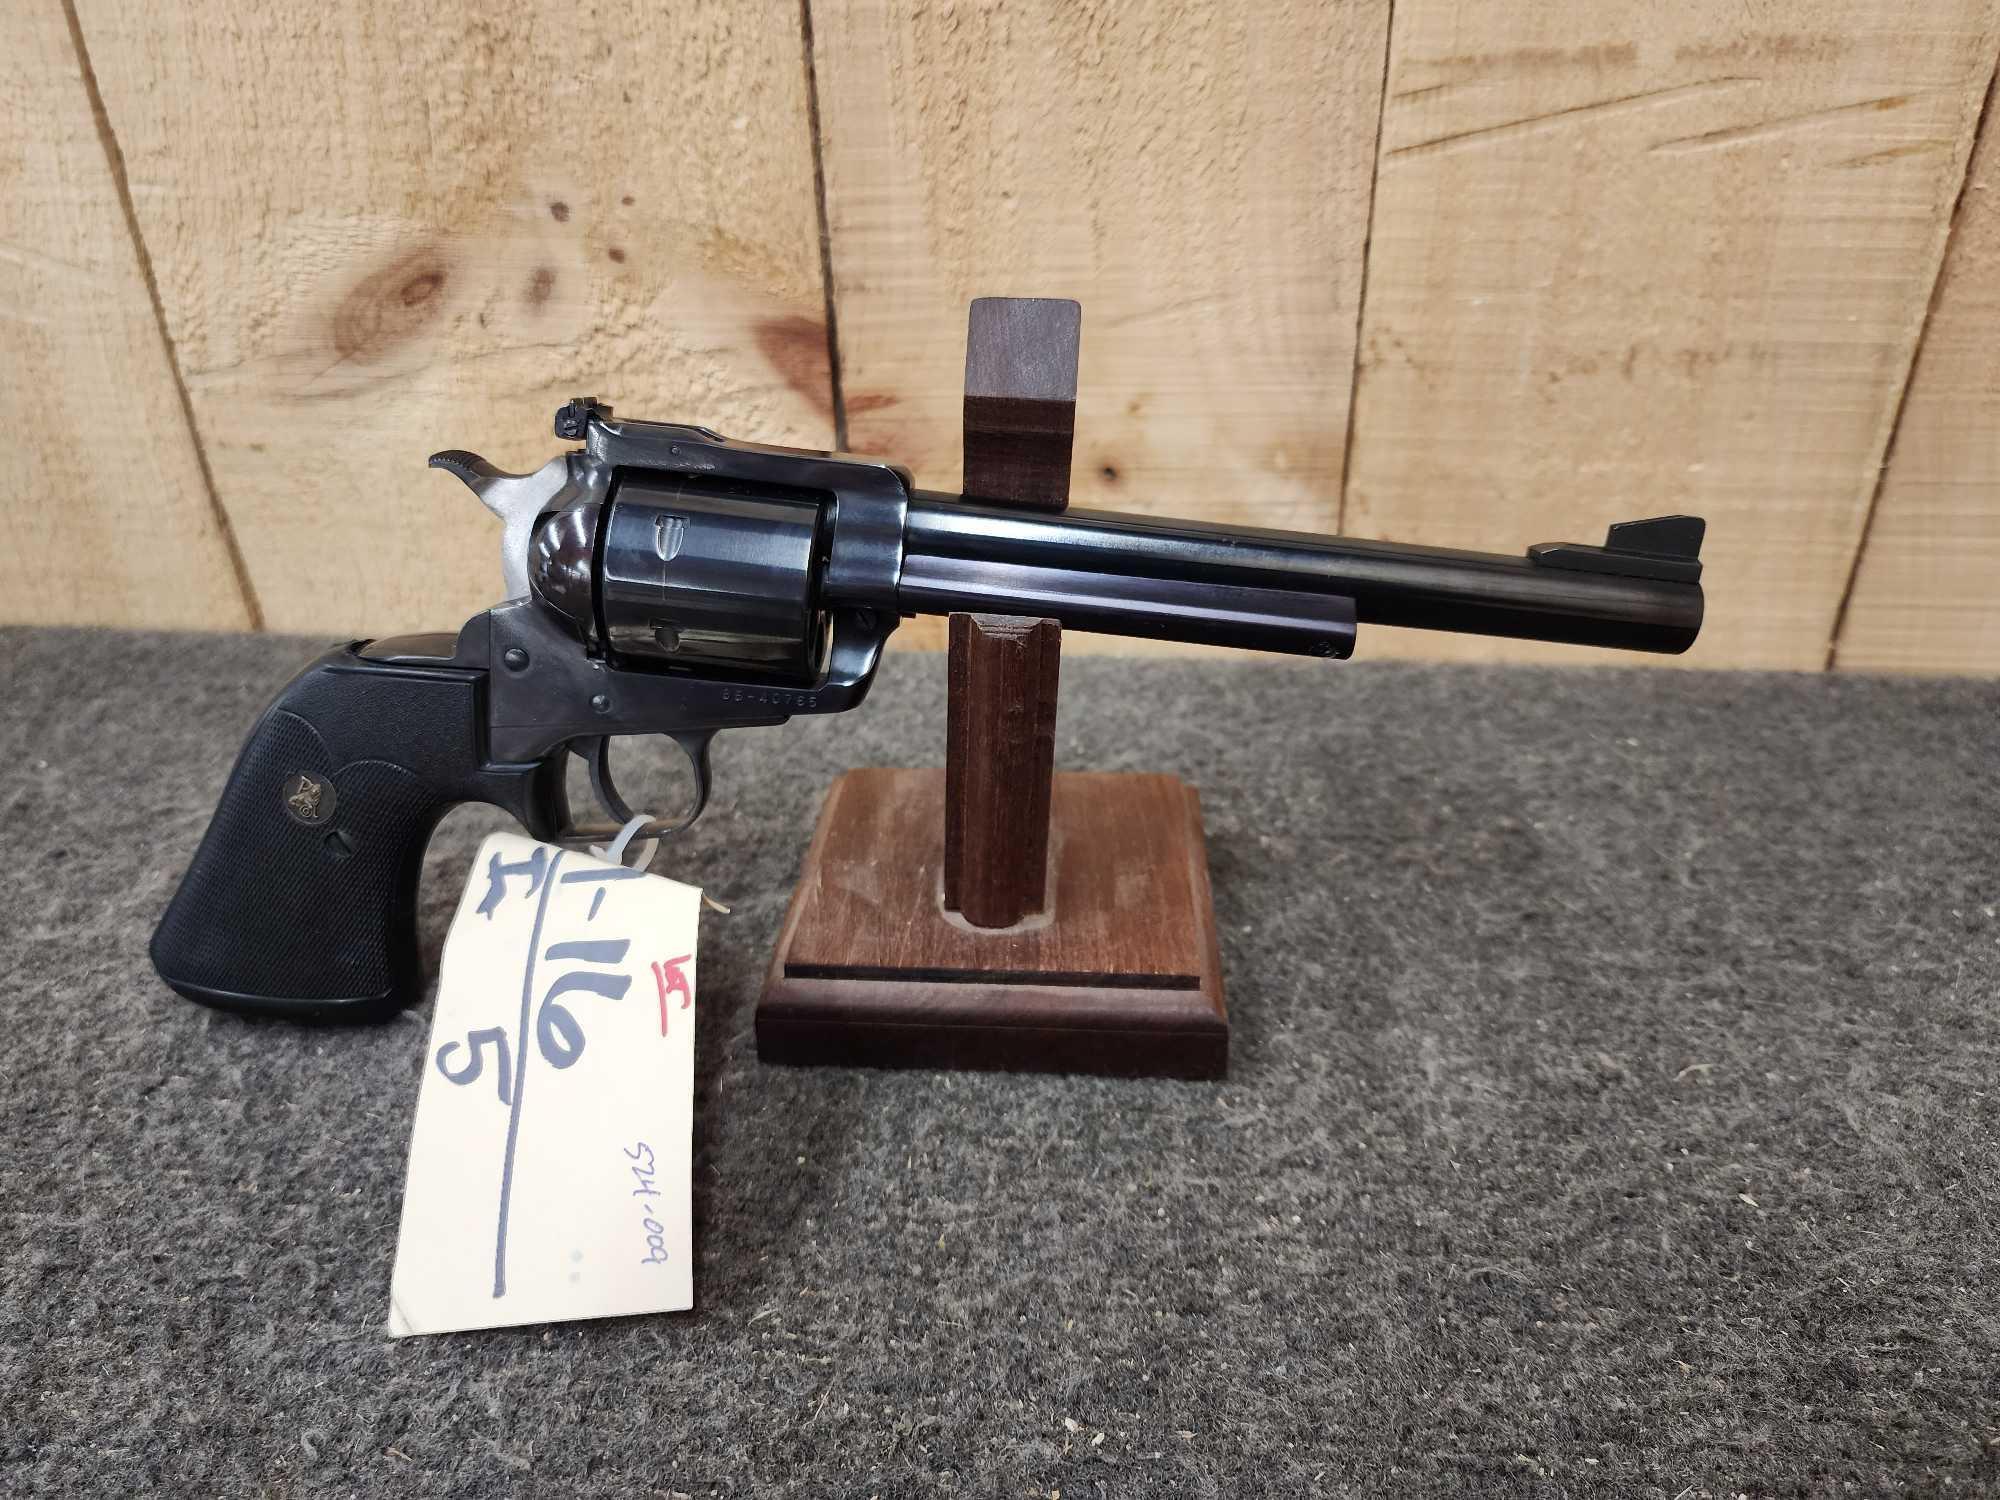 Ruger New Model Super Blackhawk. 44 Mag Revolver